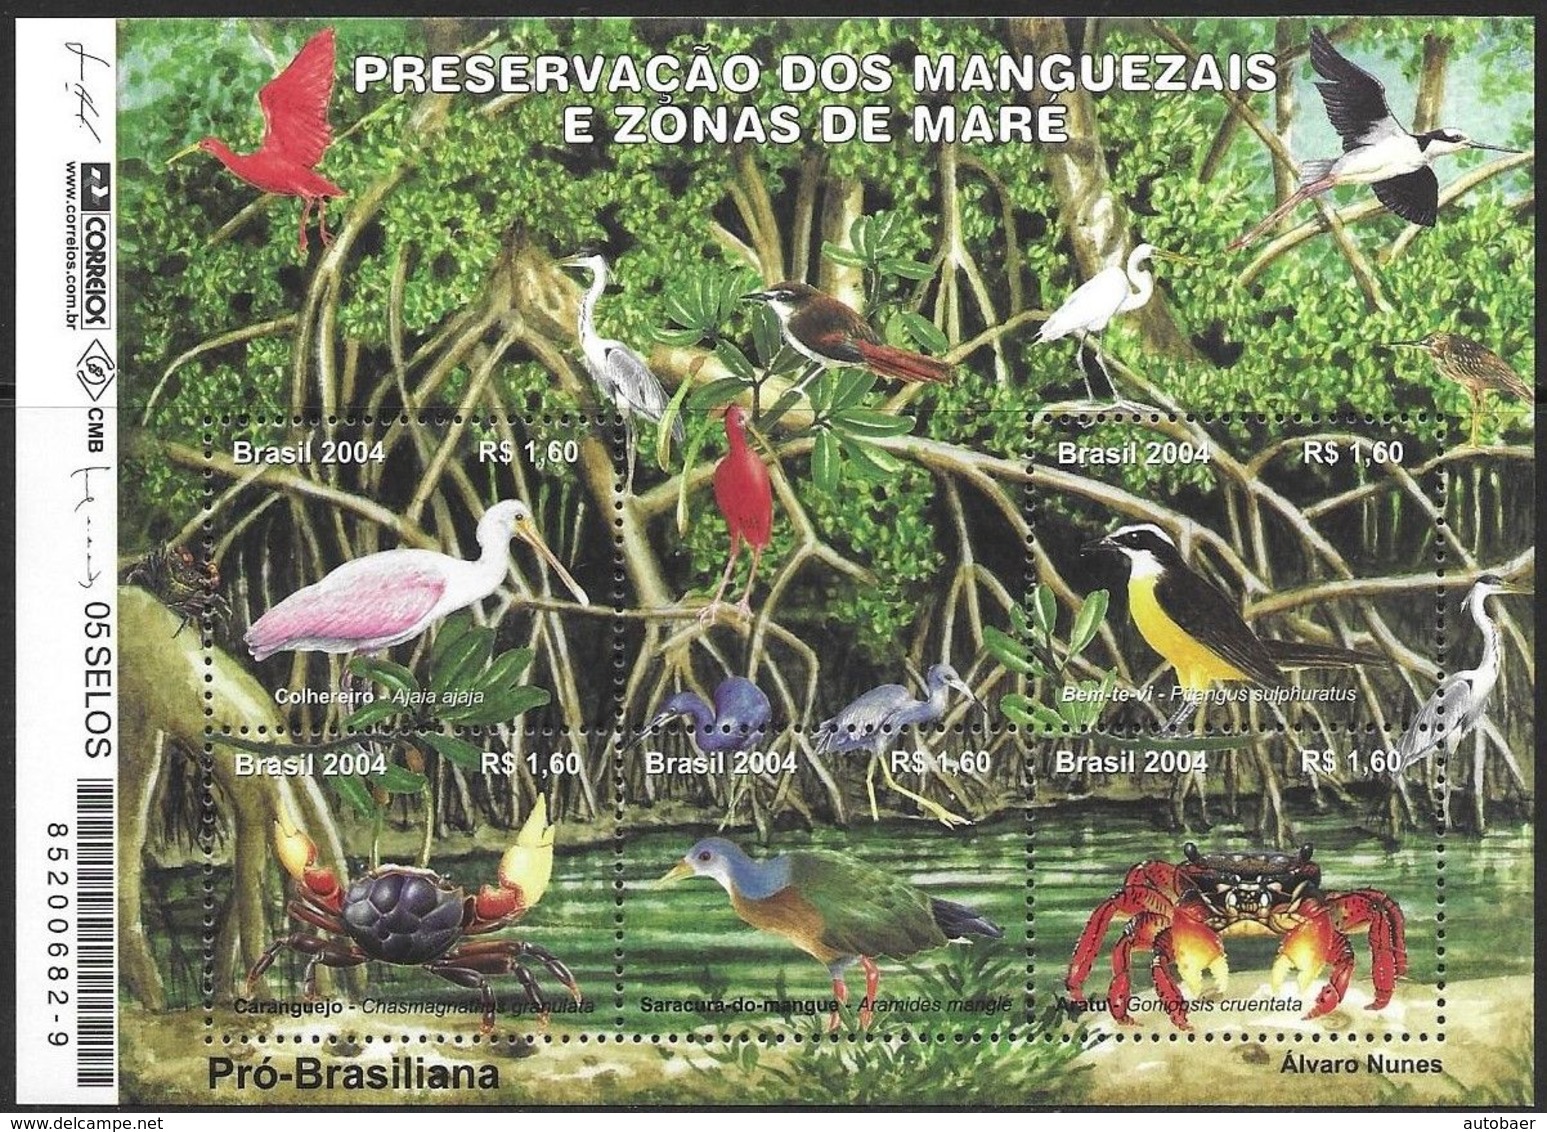 Brazil Brasil Brasilien 2004 Conservation Environment Protection Michel No. Bl. 127 (3364-68) MNH Mint Postfrisch Neuf** - Ungebraucht